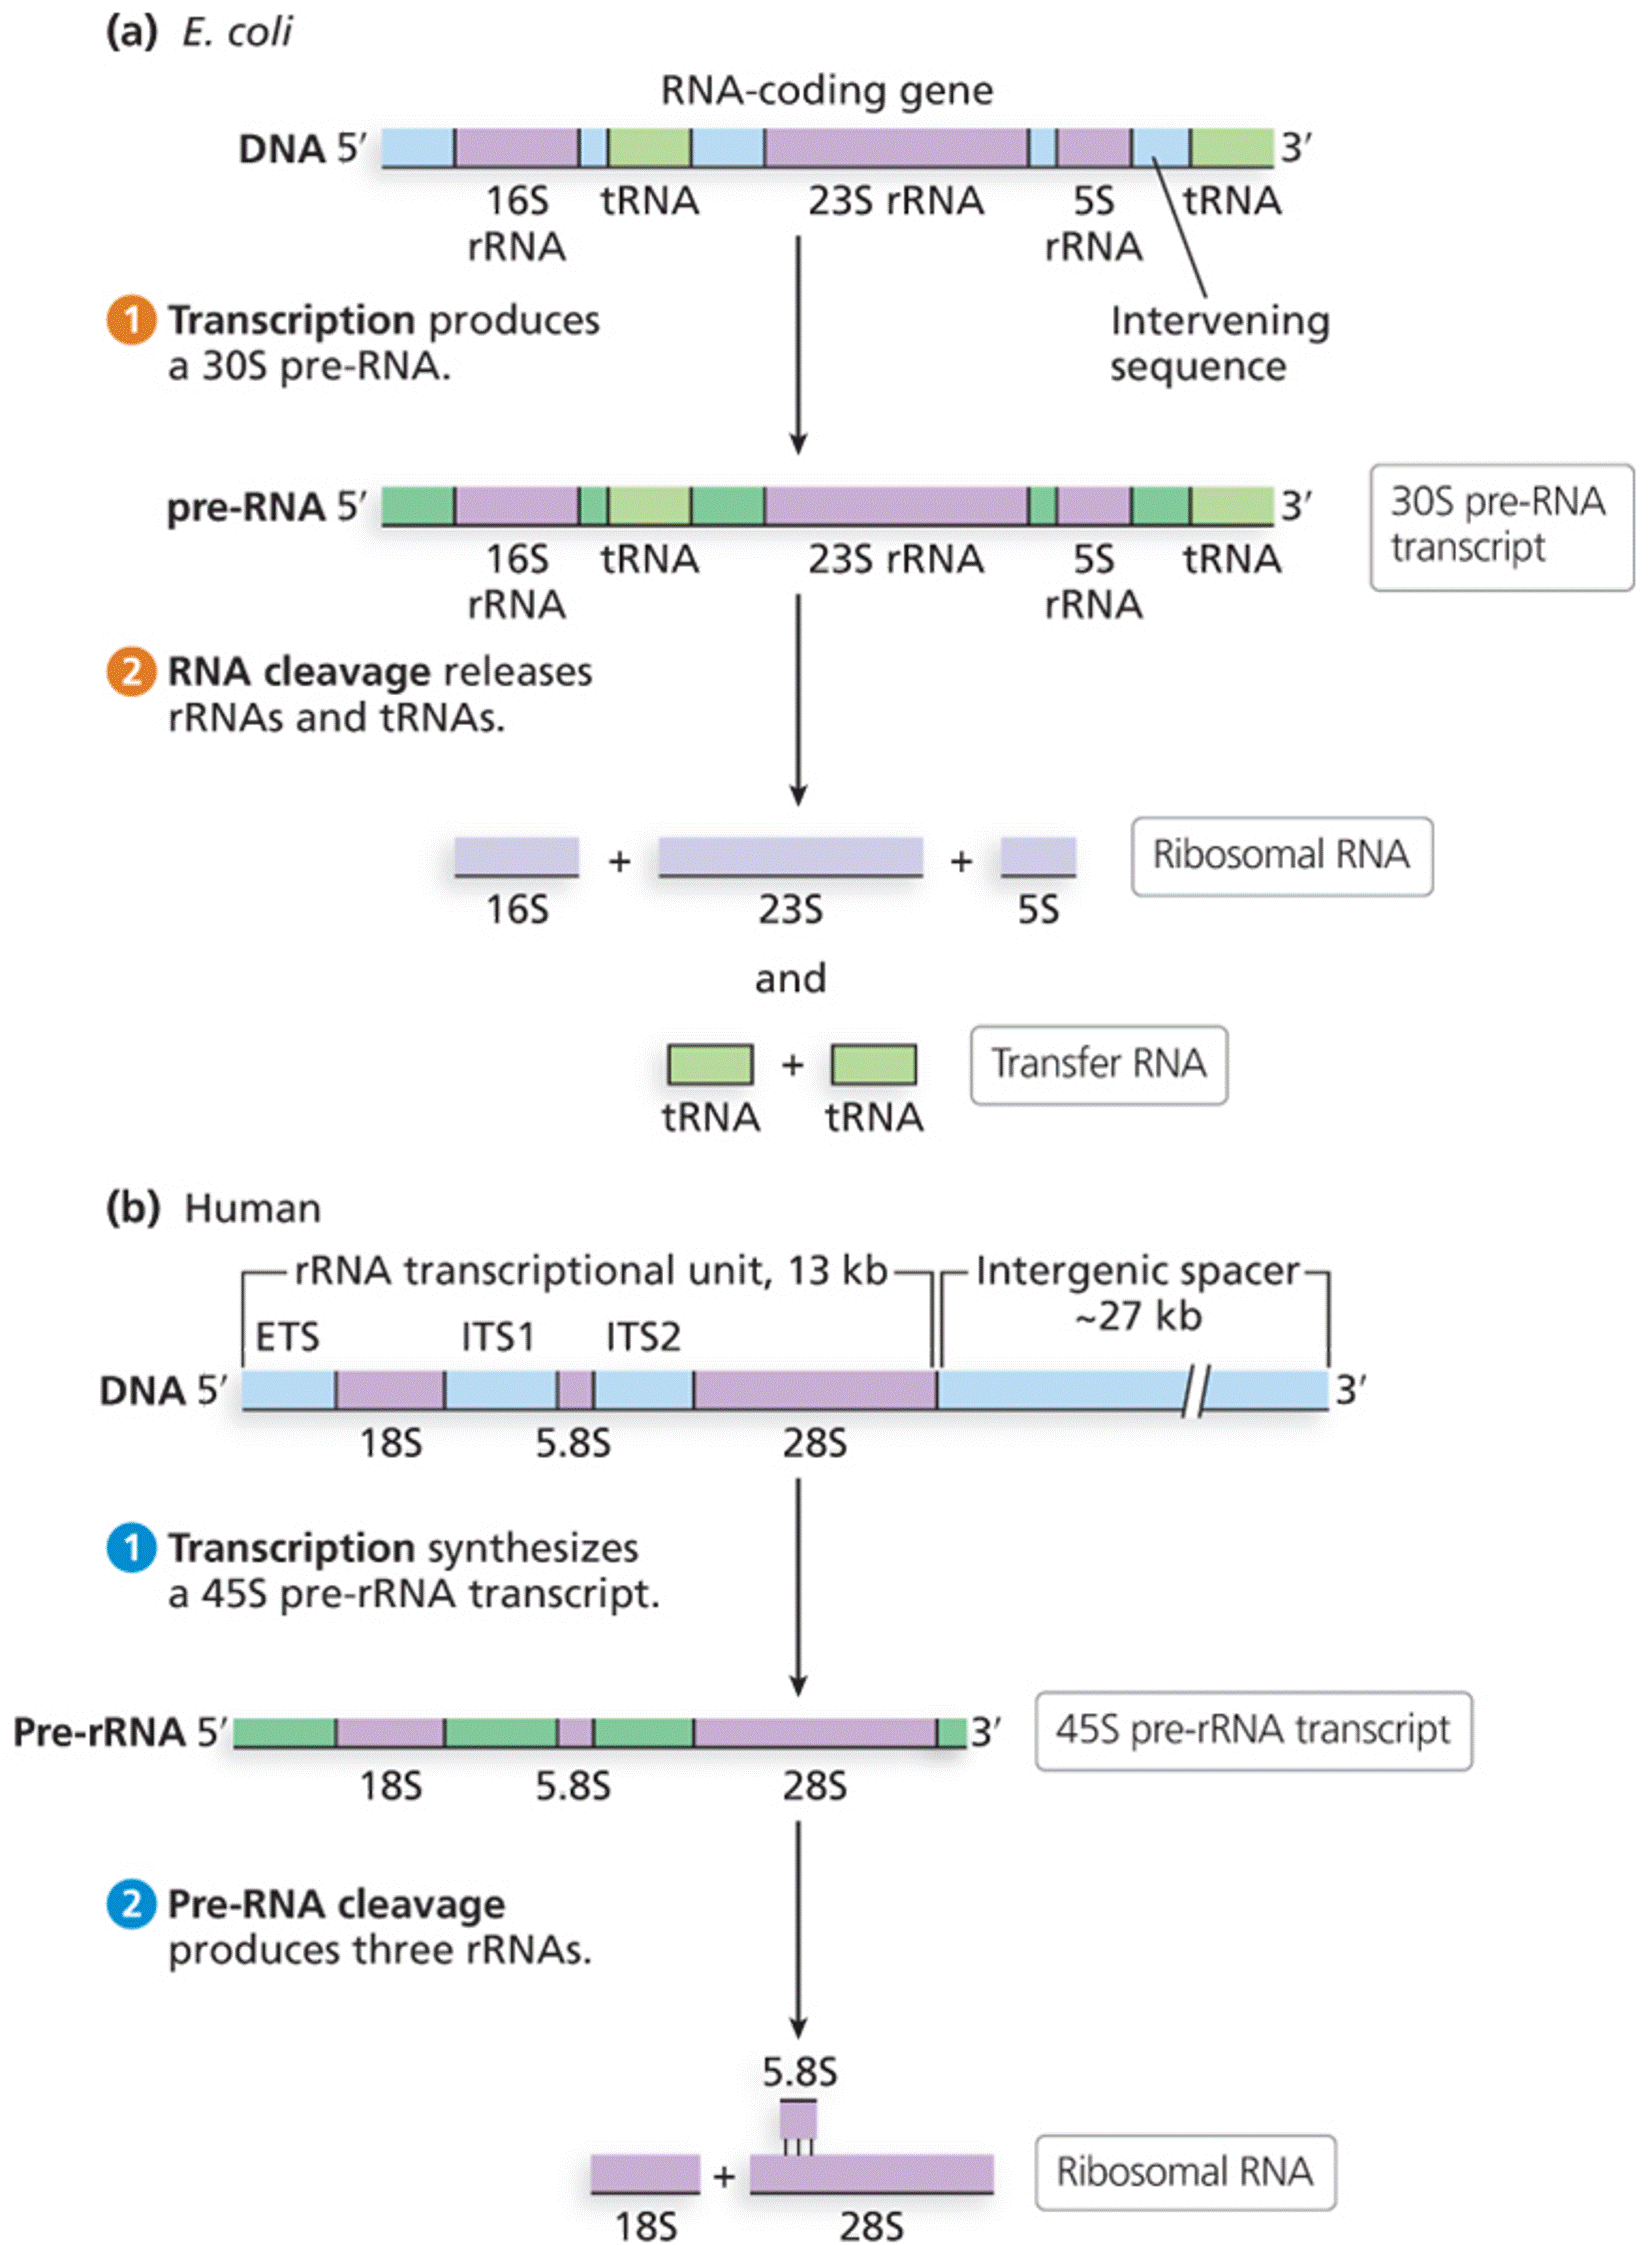 The processing of ribosomal and transfer RNA